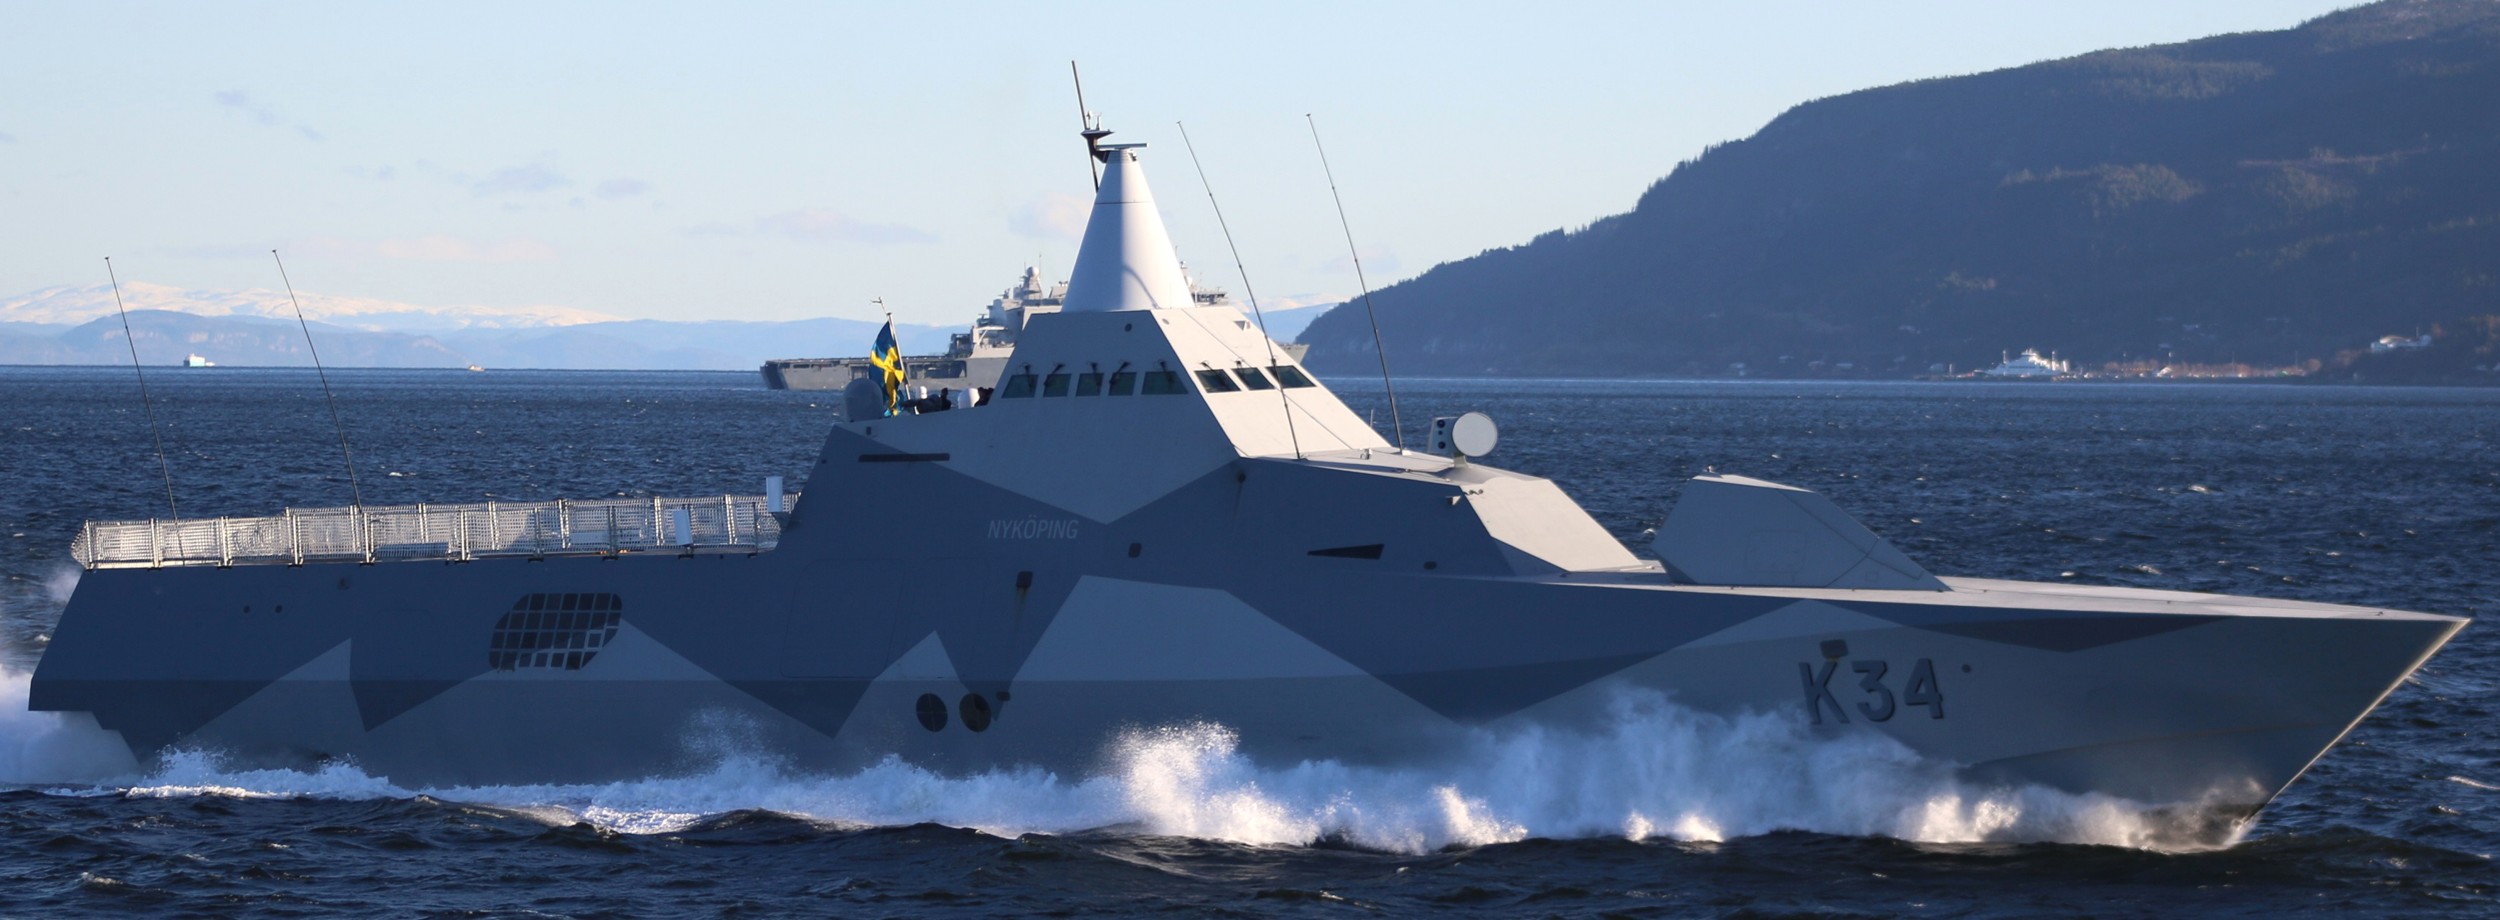 k34 hswms hms nykoping visby class corvette royal swedish navy svenska marinen 10